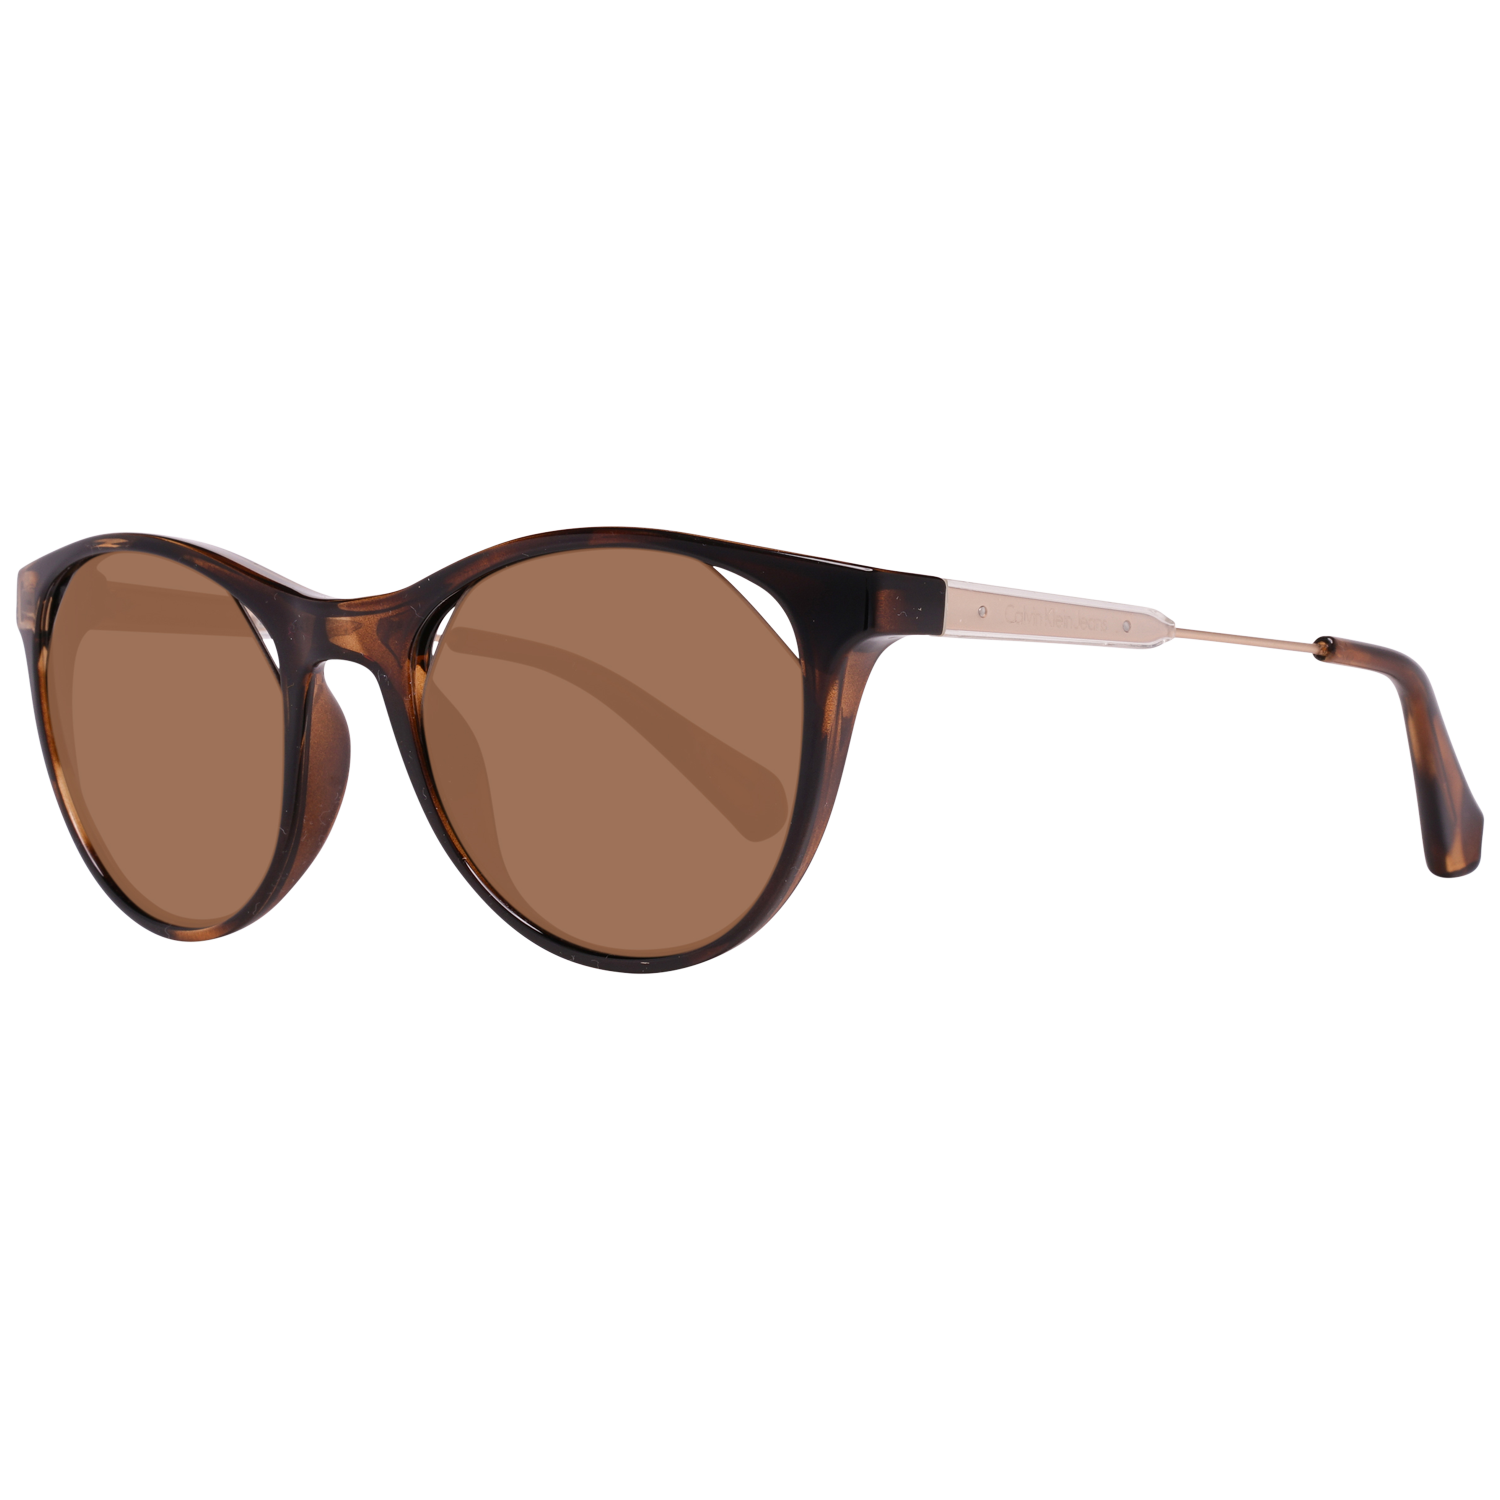 Calvin Klein Sunglasses CKJ510S 215 52